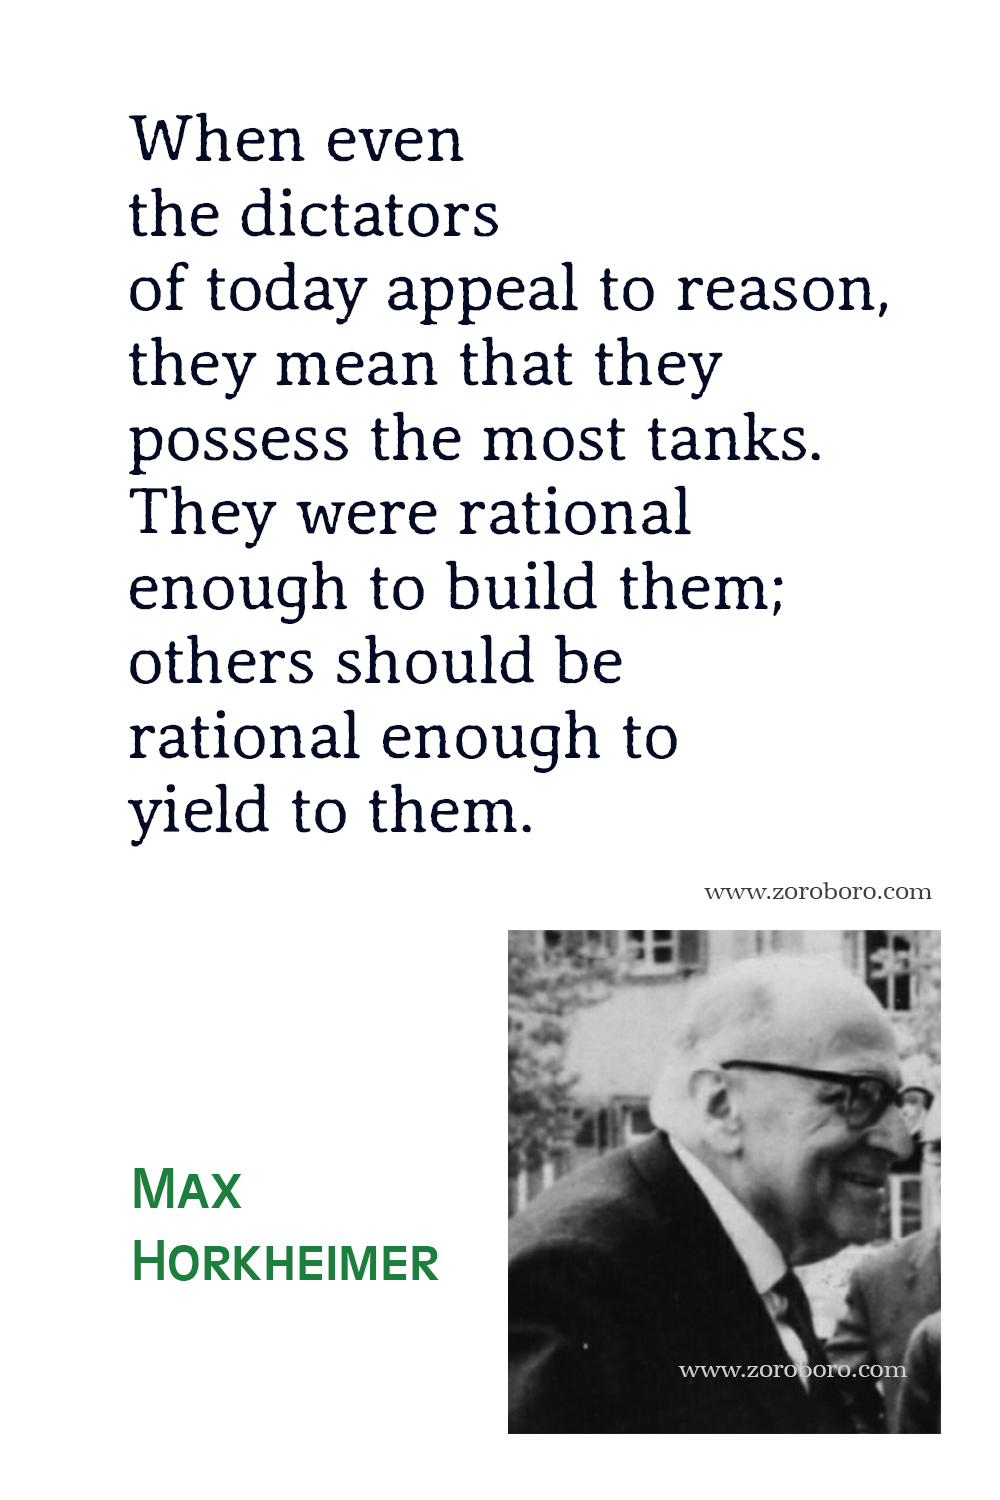 Max Horkheimer Quotes, Max Horkheimer Theory, Max Horkheimer Books Quotes, Max Horkheimer.